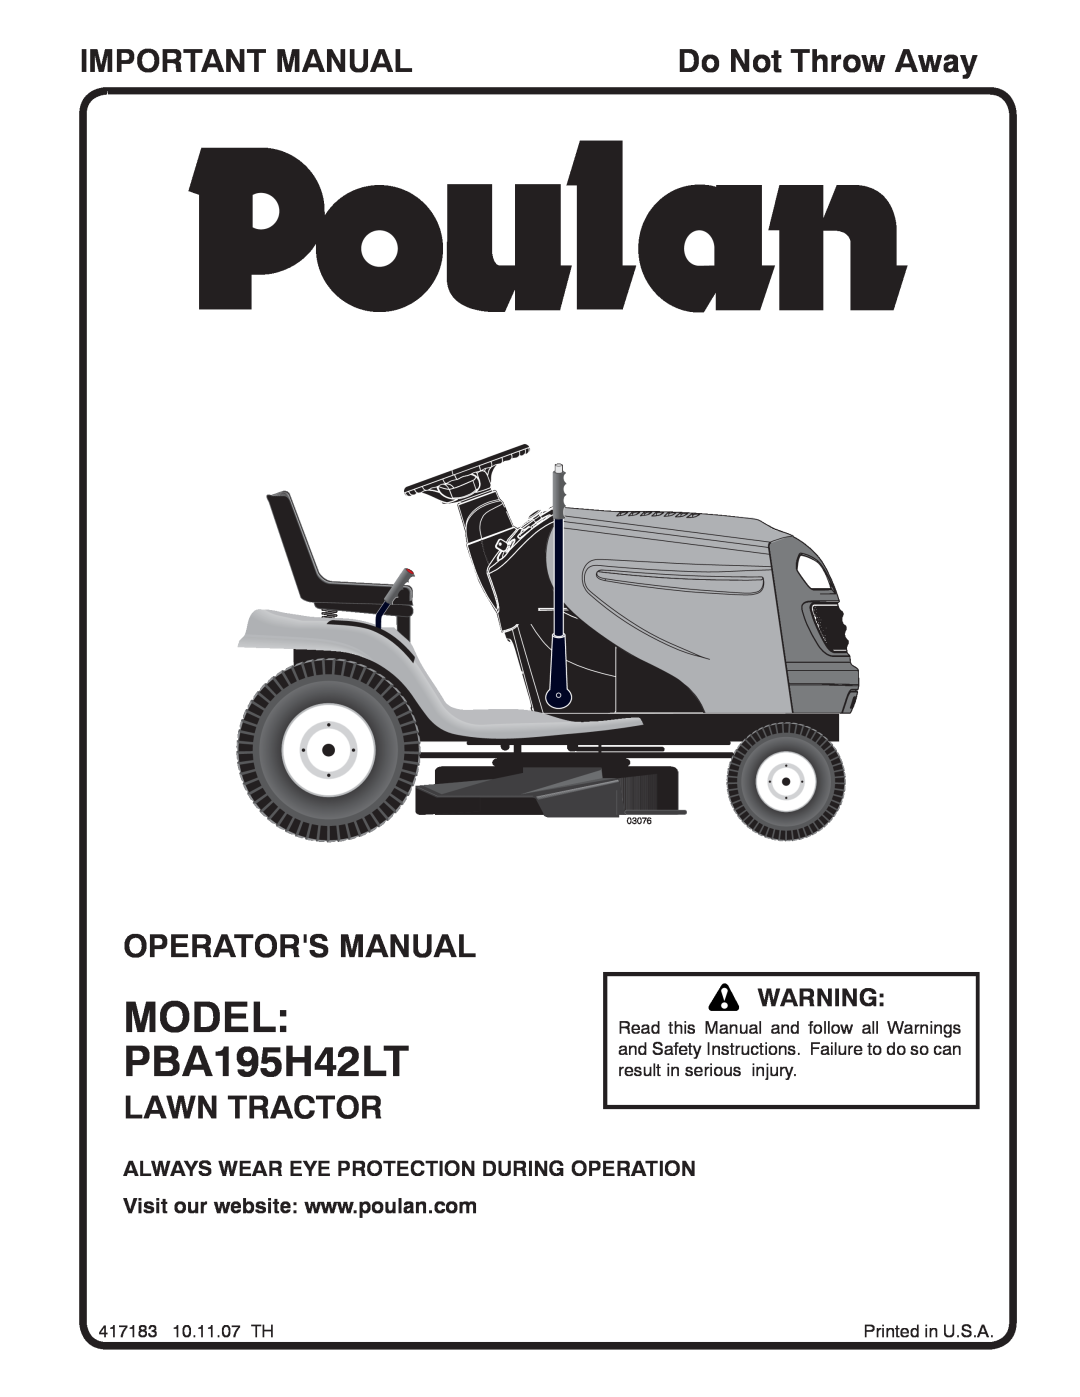 Poulan manual MODEL PBA195H42LT, Important Manual, Operators Manual, Lawn Tractor, Do Not Throw Away, 03076 